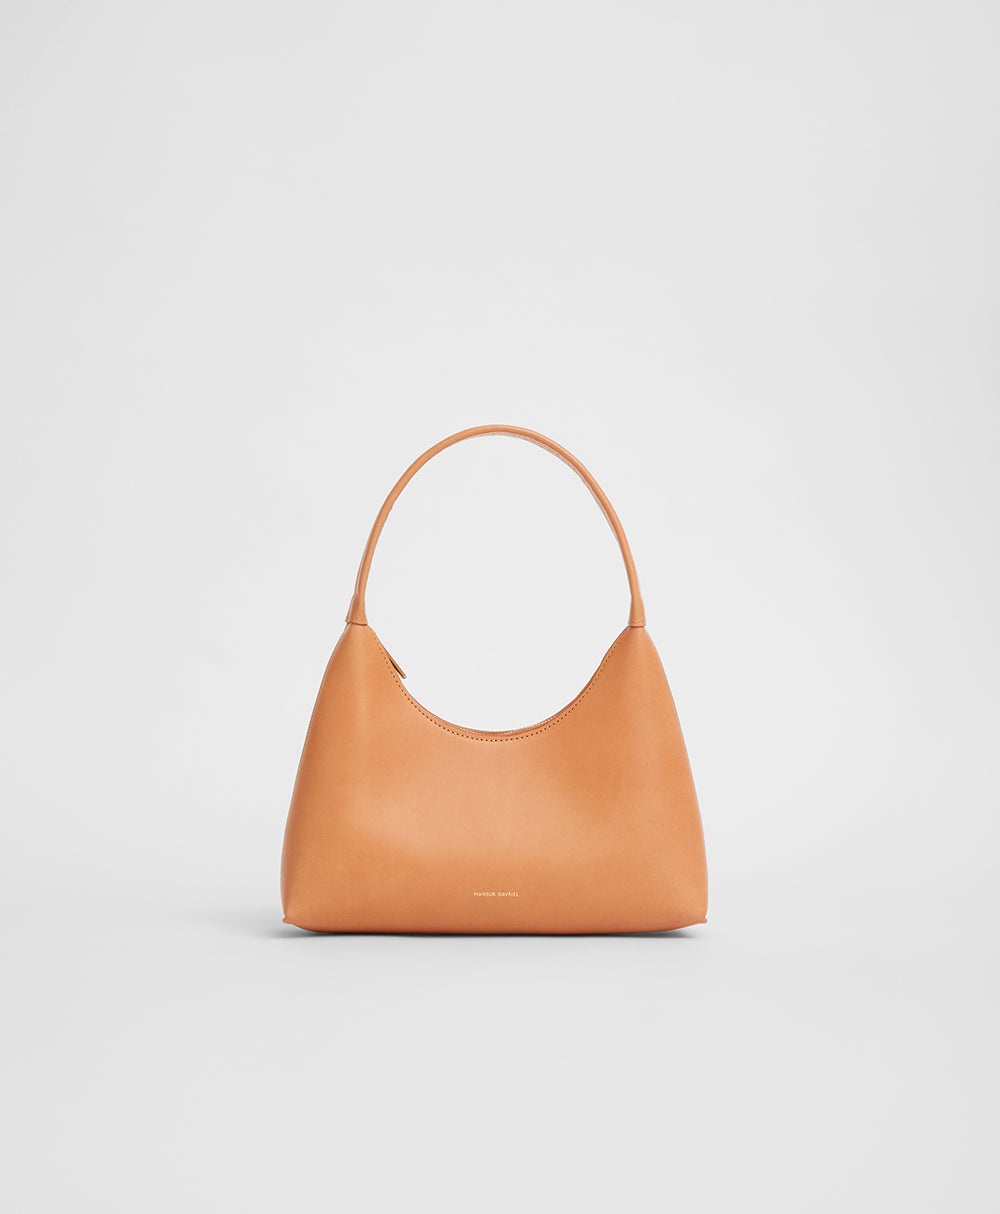  Bag Organizer for Saint Laurent Shopping Tote (Large) - Premium  Felt (Handmade/20 Colors) : Handmade Products